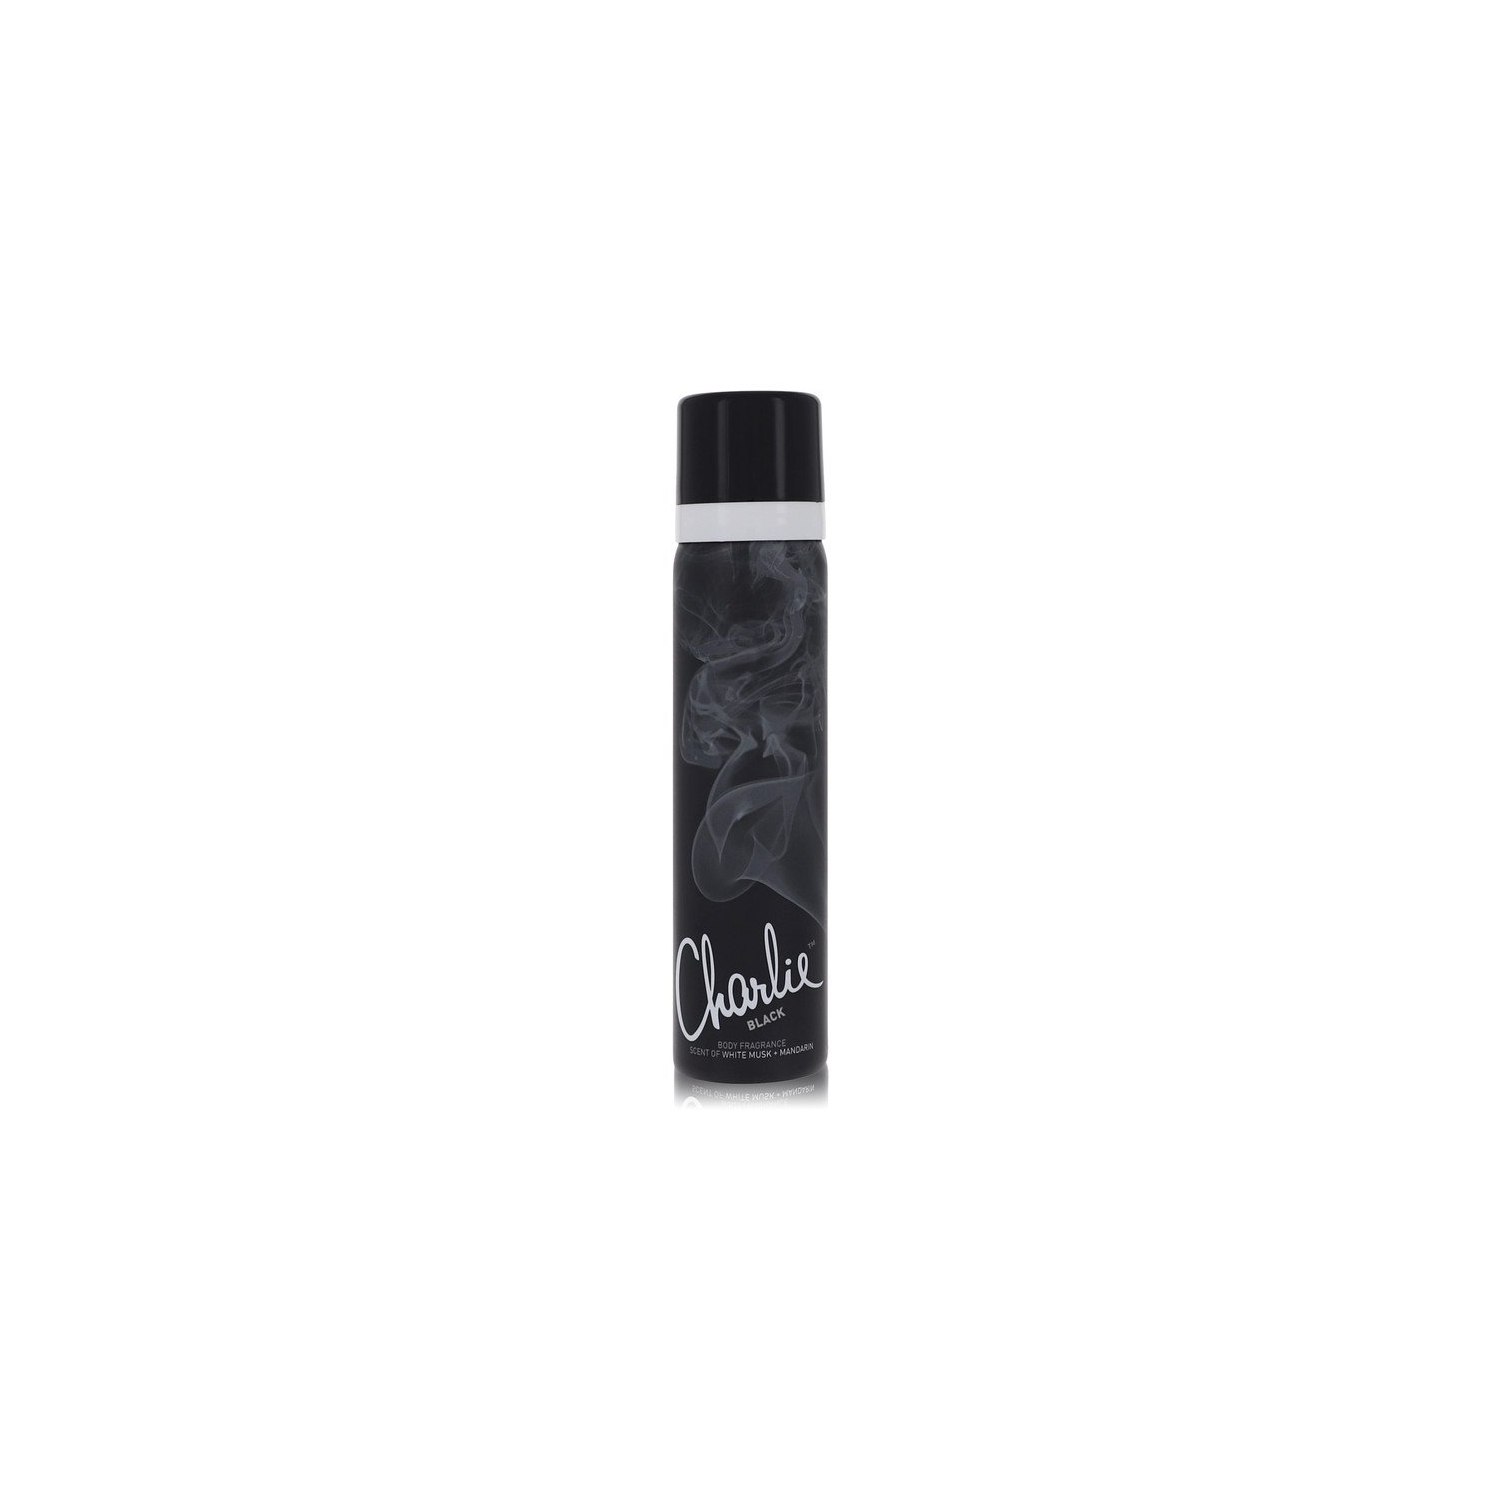 Charlie Black by Revlon Body Fragrance Spray 2.5 oz for Women